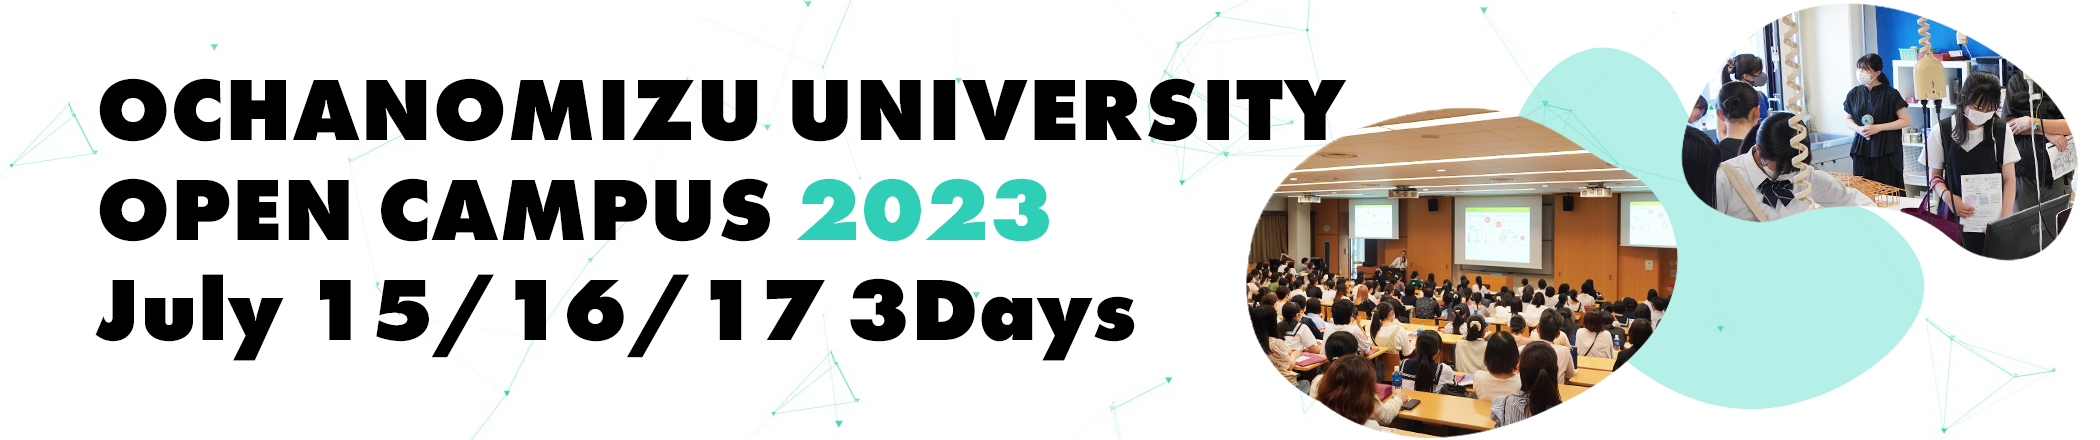 Ochanomizu University Open Campus 2023 July 15/16/17 3Days